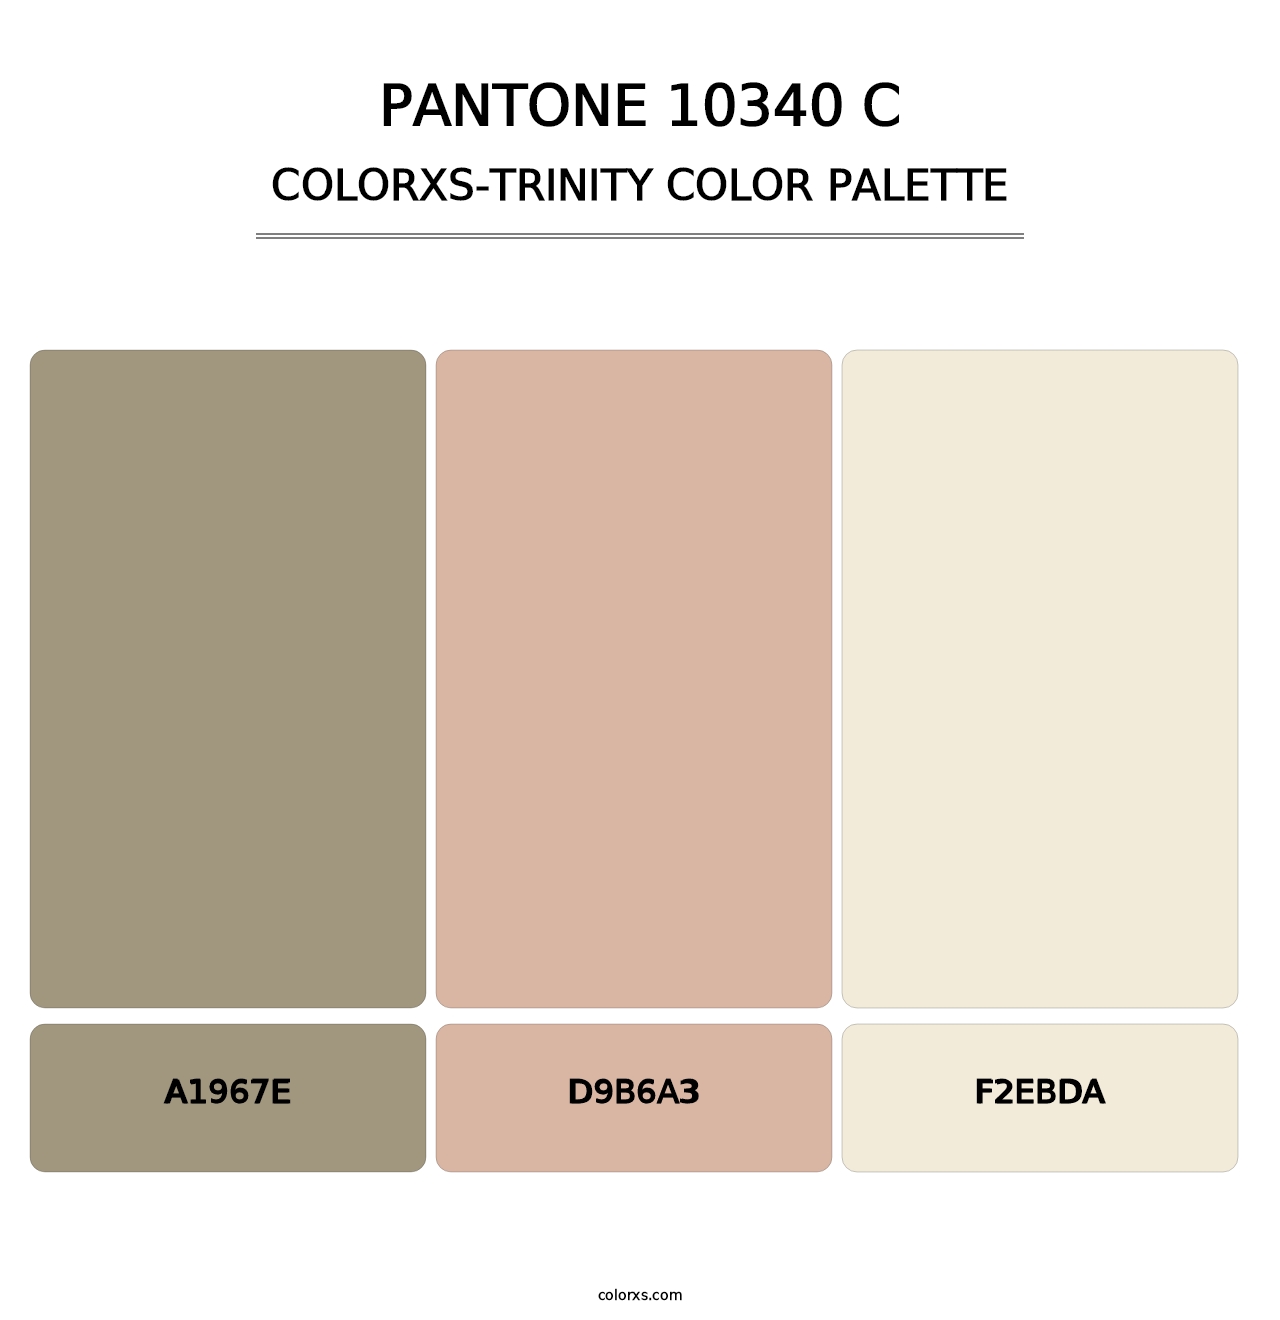 PANTONE 10340 C - Colorxs Trinity Palette